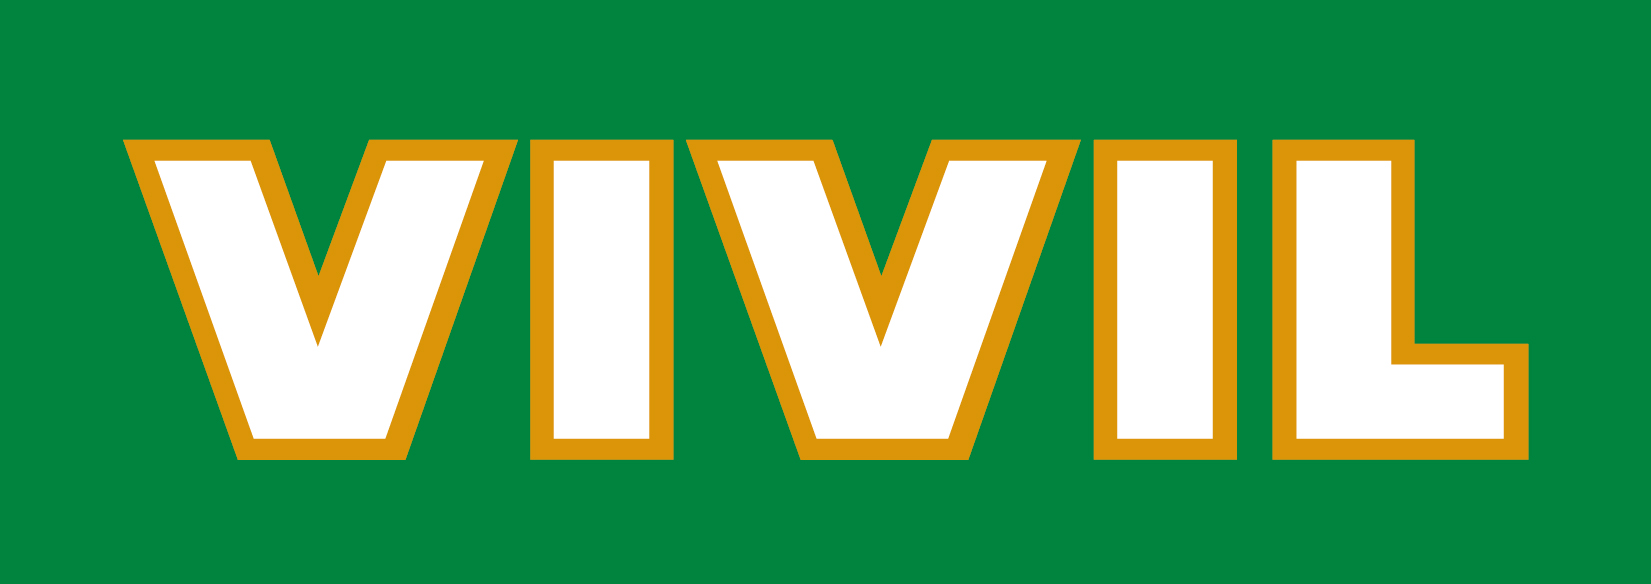 vivil logo gold auf gruen